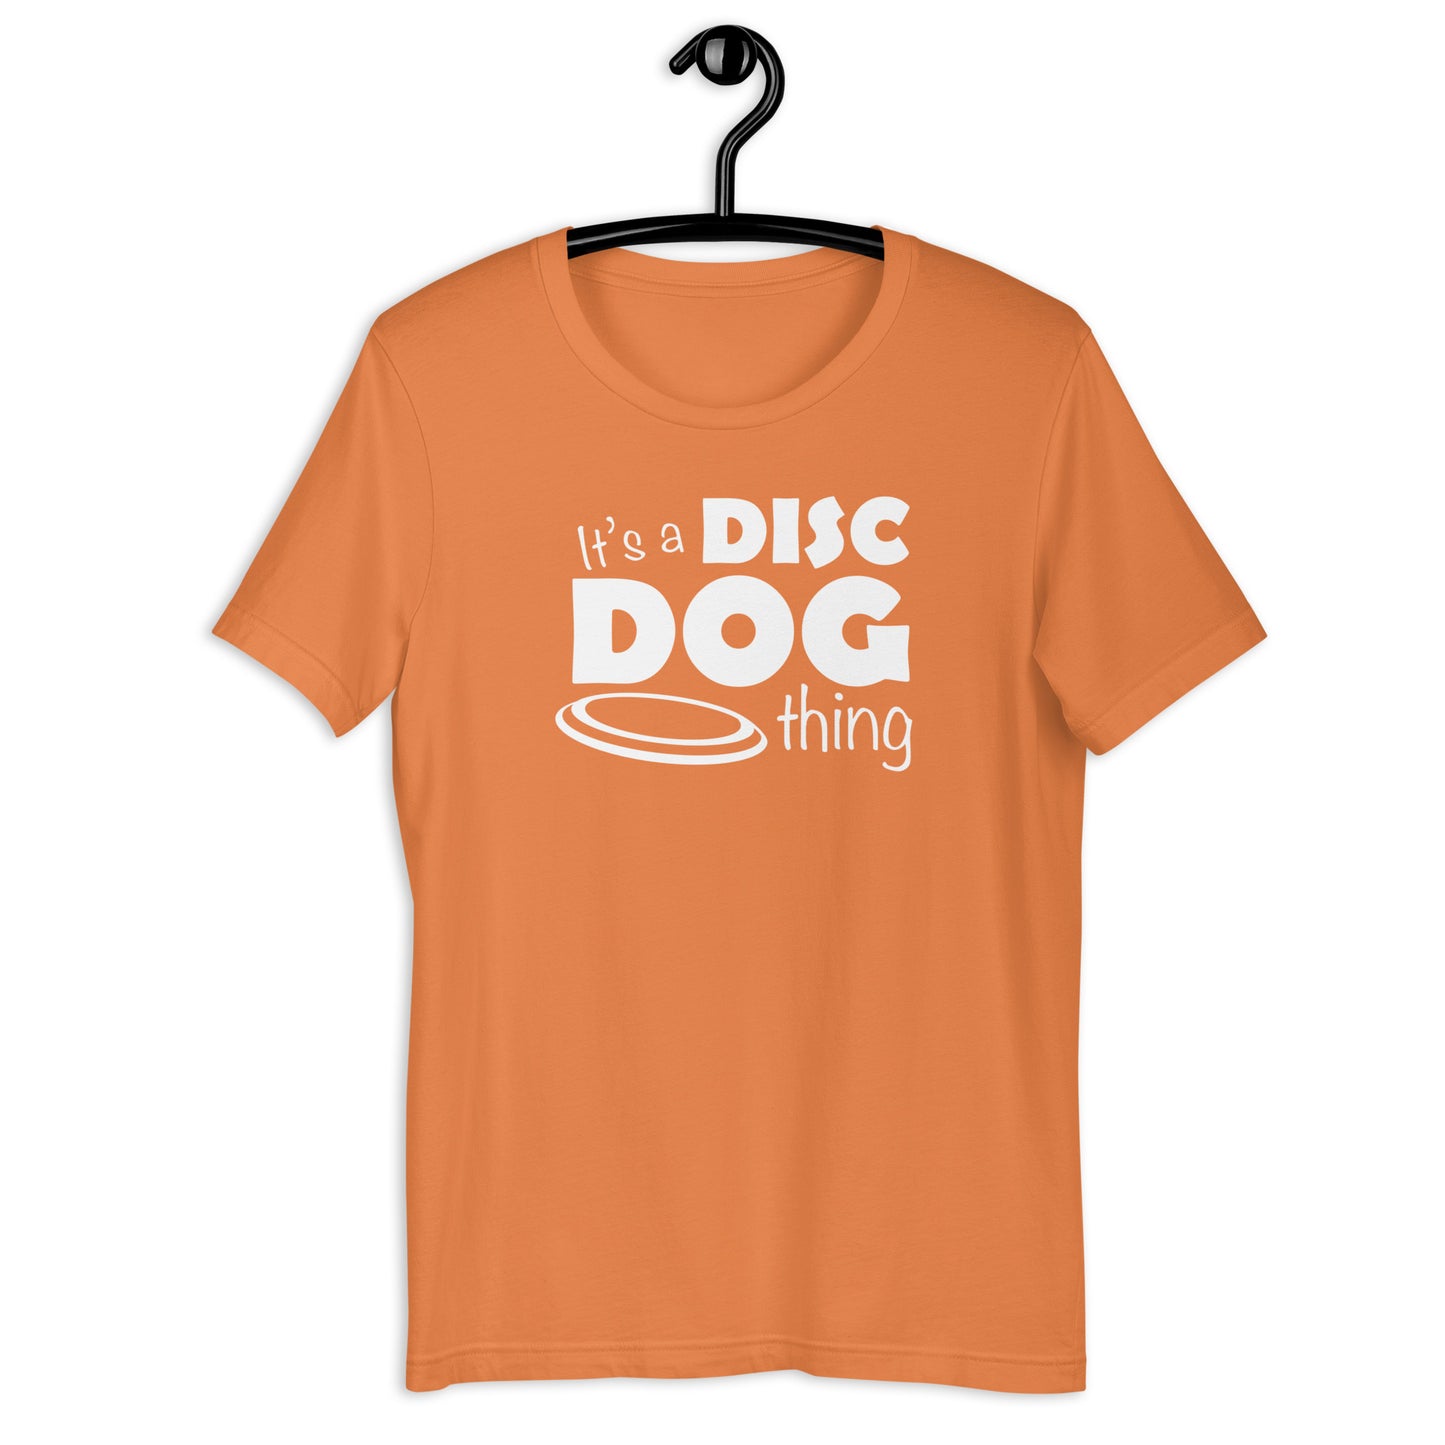 ITS A DISC DOG THING - Unisex t-shirt